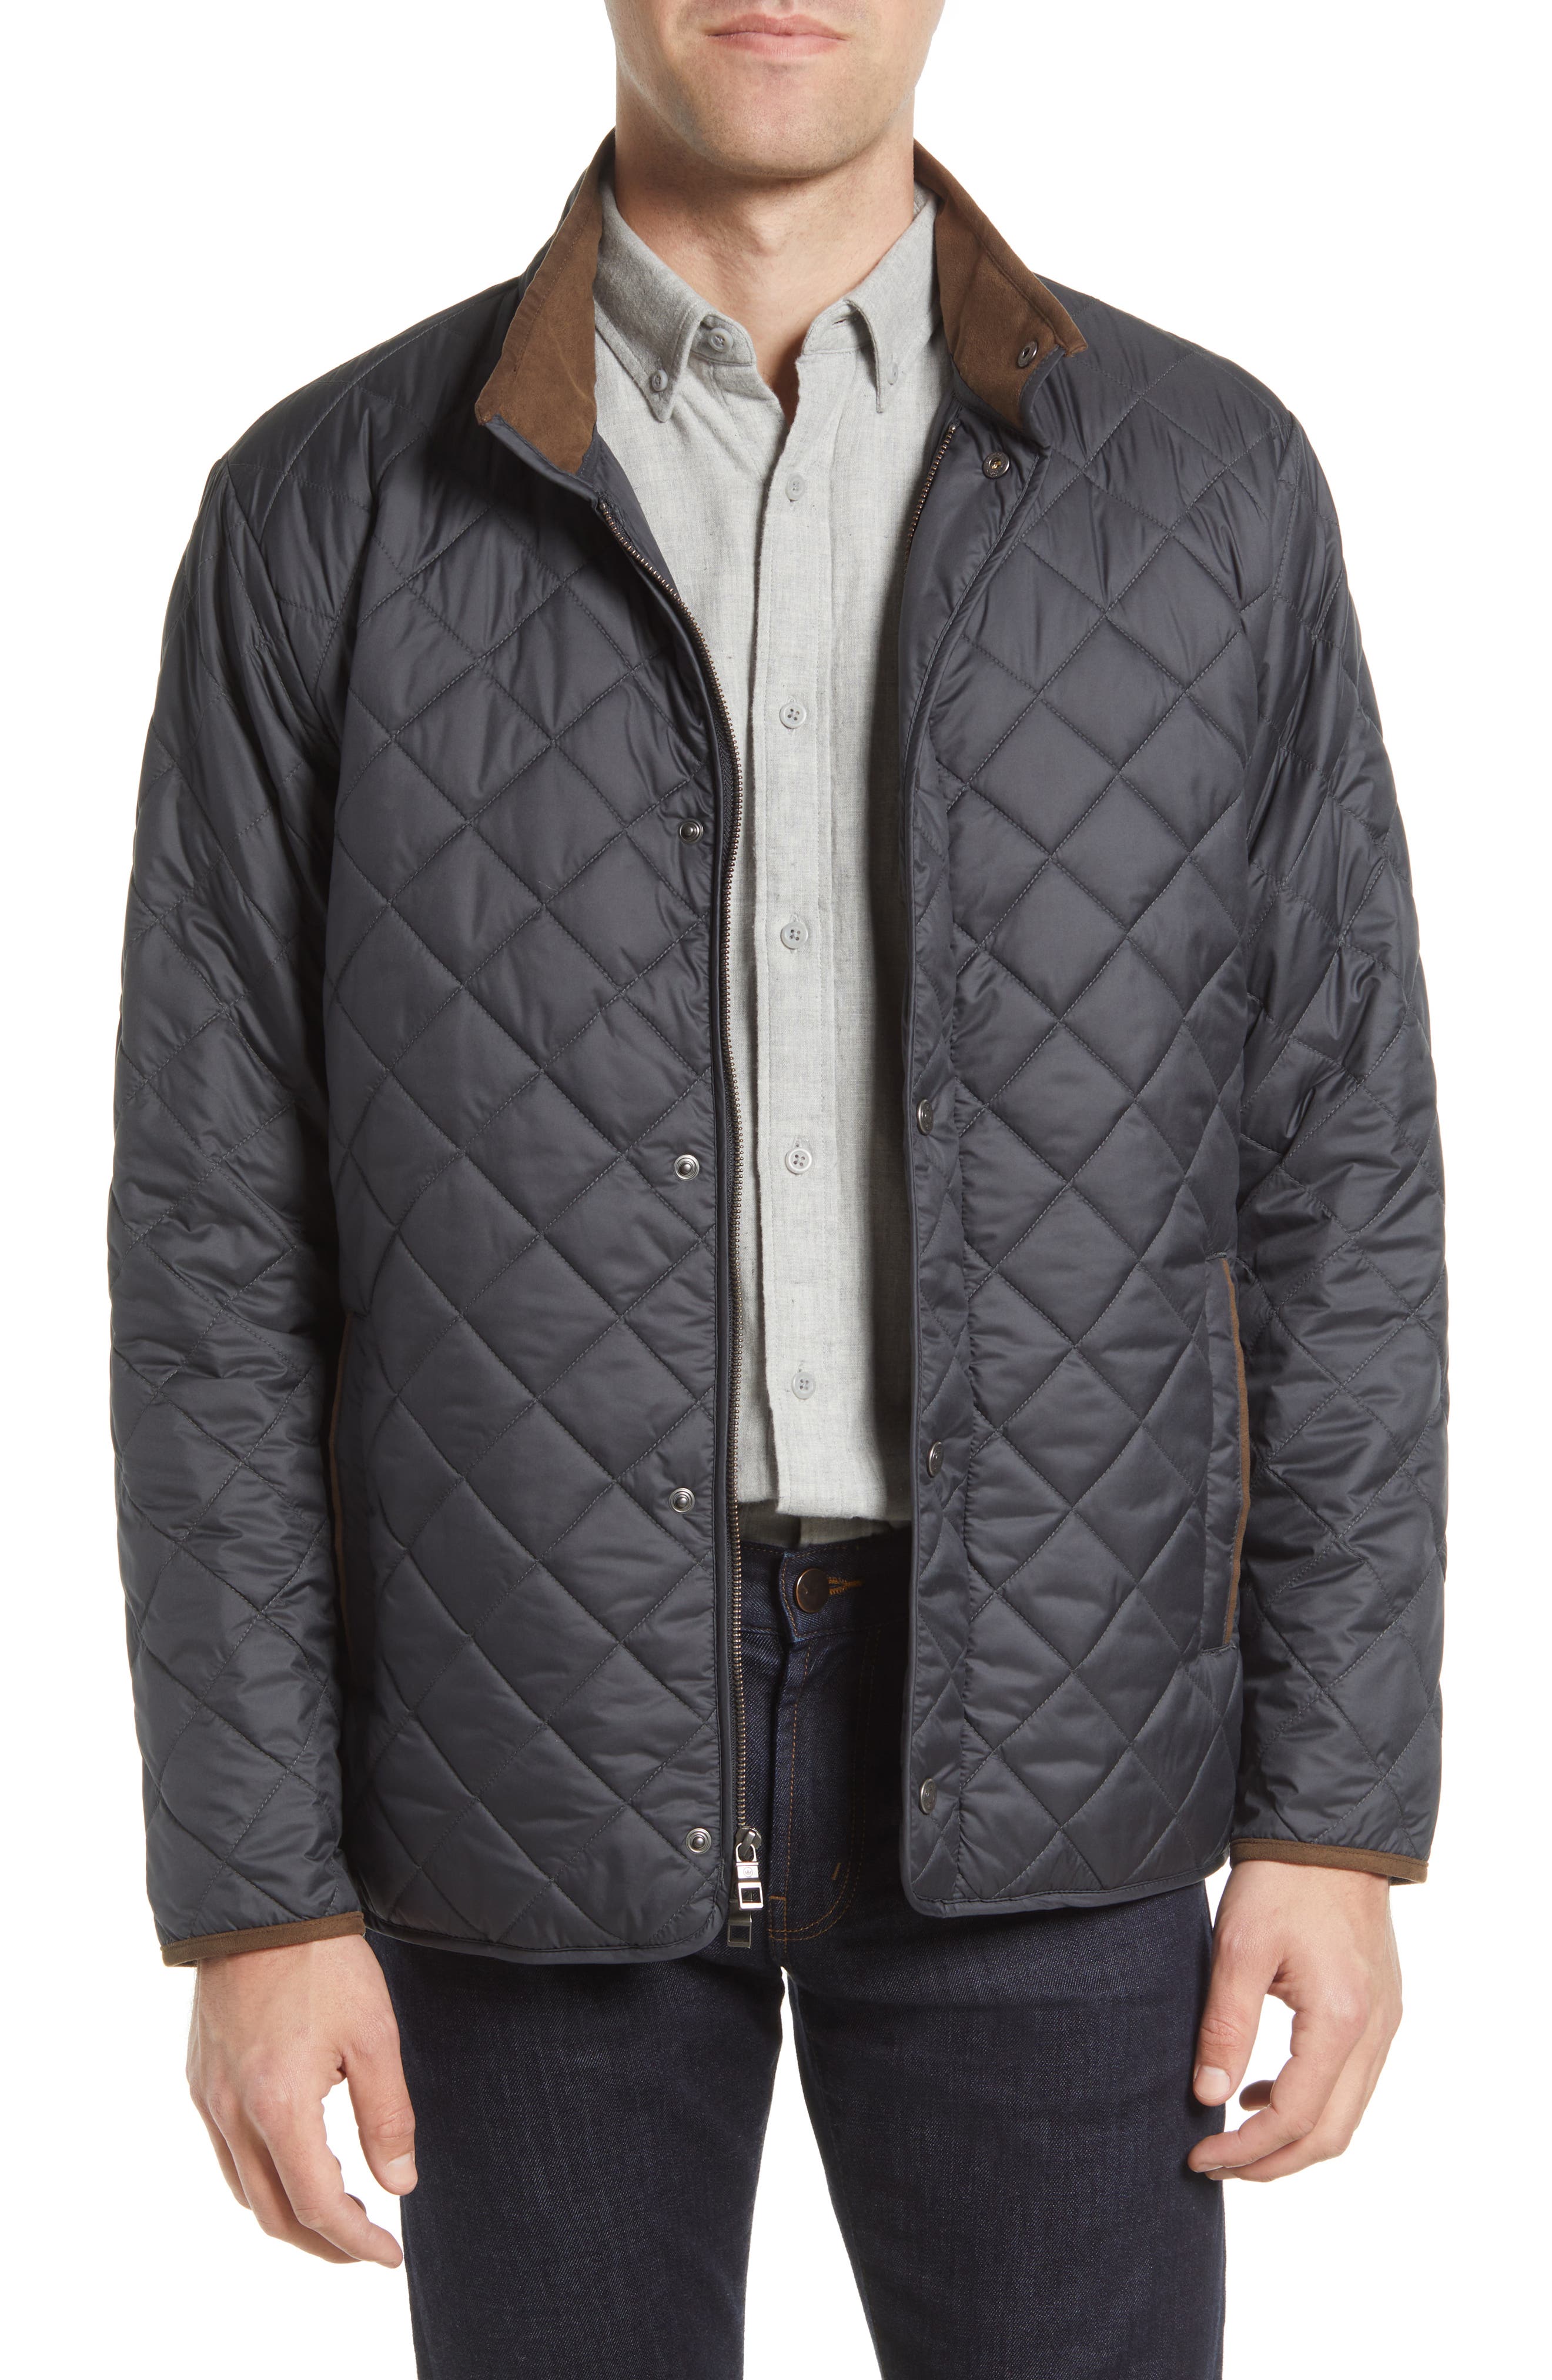 discount 65% NoName light jacket KIDS FASHION Jackets Elegant Gray 11Y 